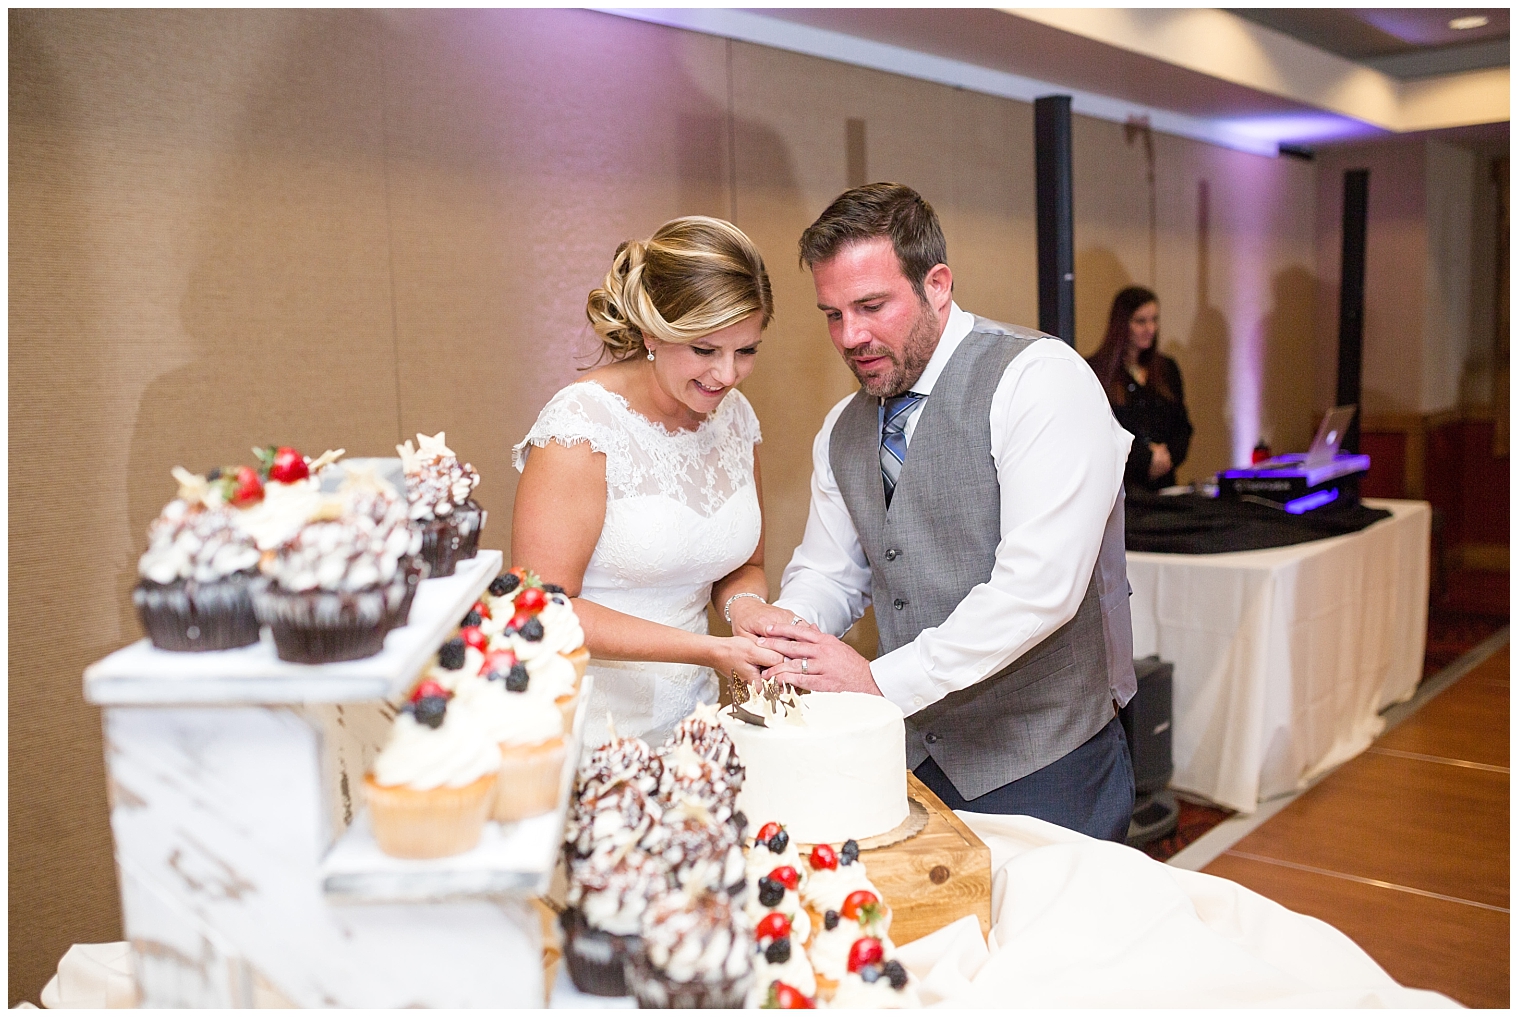 The bride and groom cut their cake at their Breckenridge Colorado wedding reception.